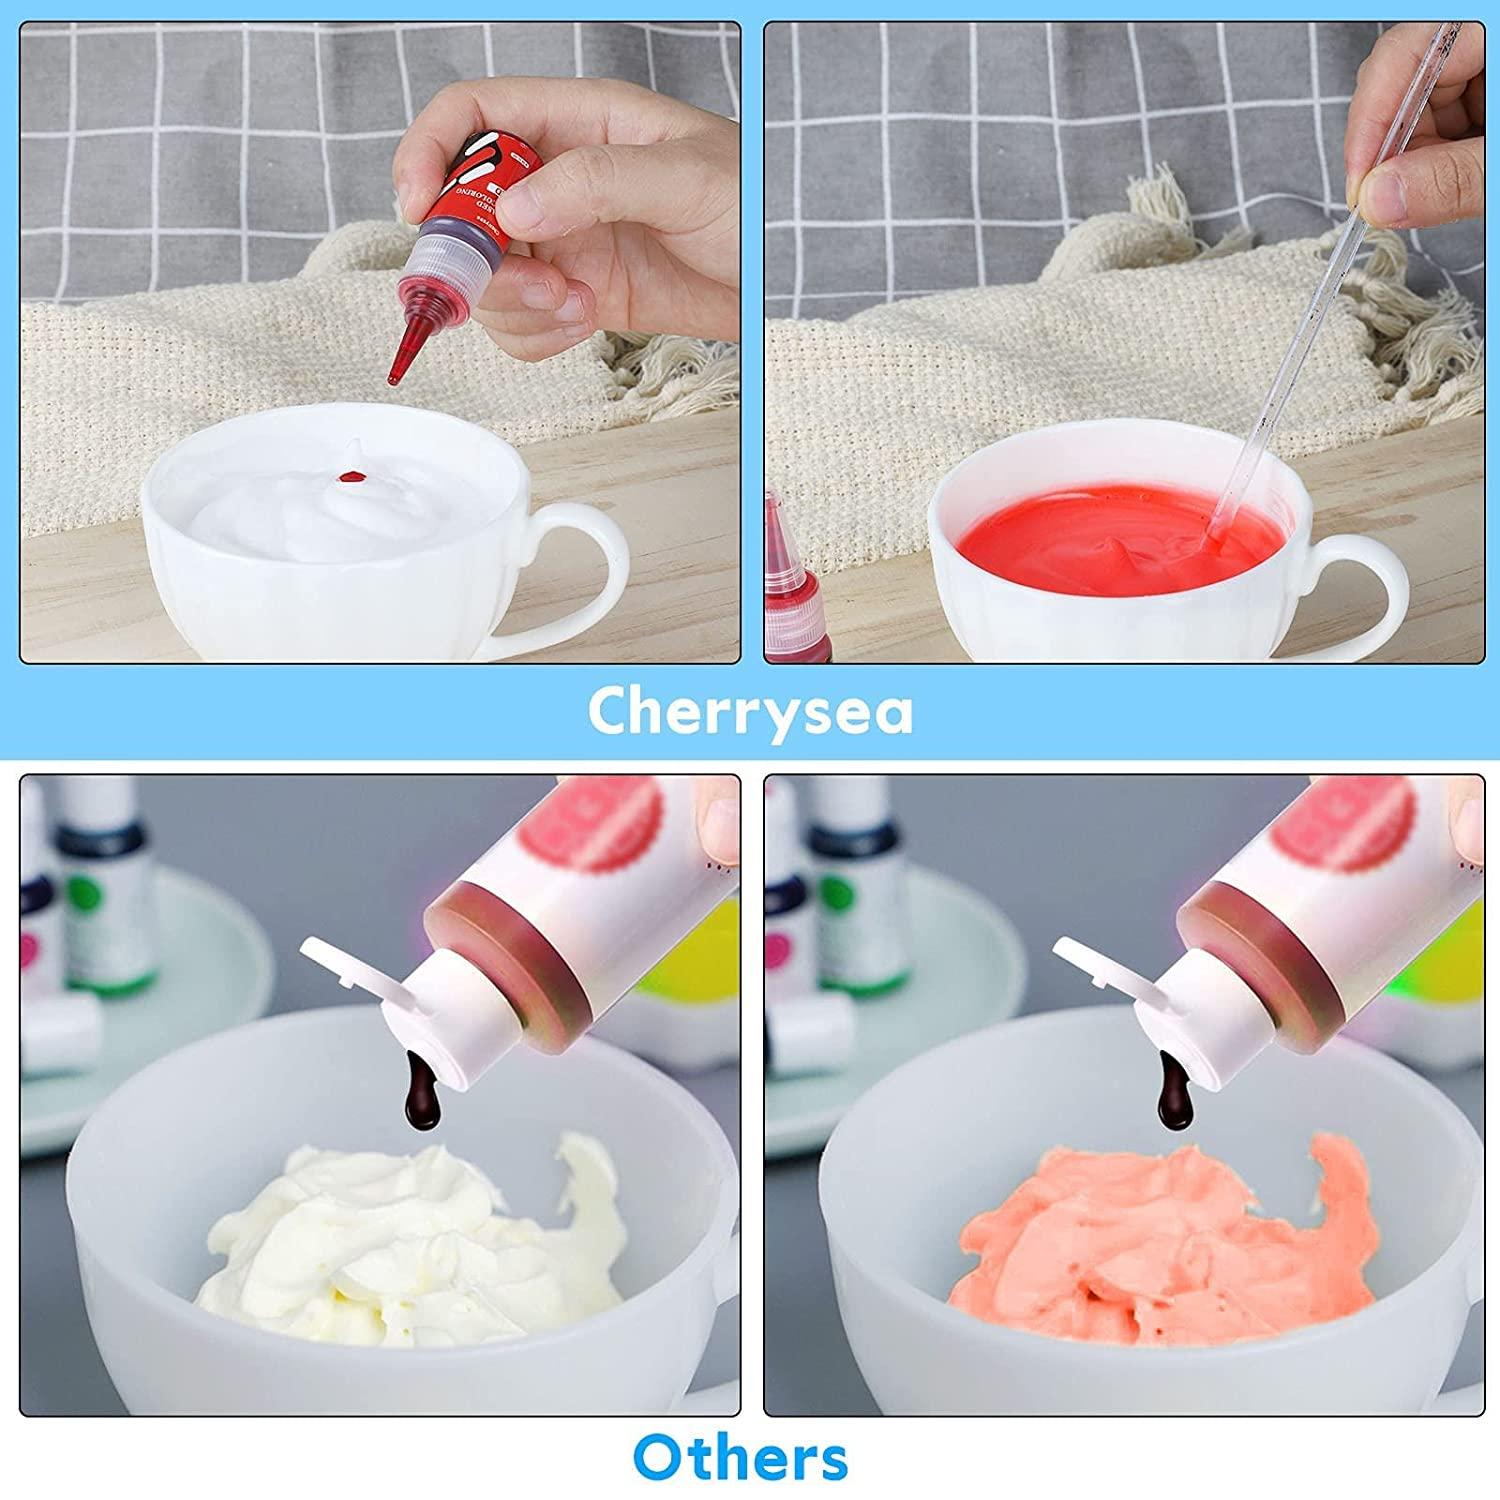 24 Colors 10ML Bottle Food Coloring Ingredients Sugar Fondant Cream Baking  Cake Food Color Pigment DIY Pastry Decorating Tools